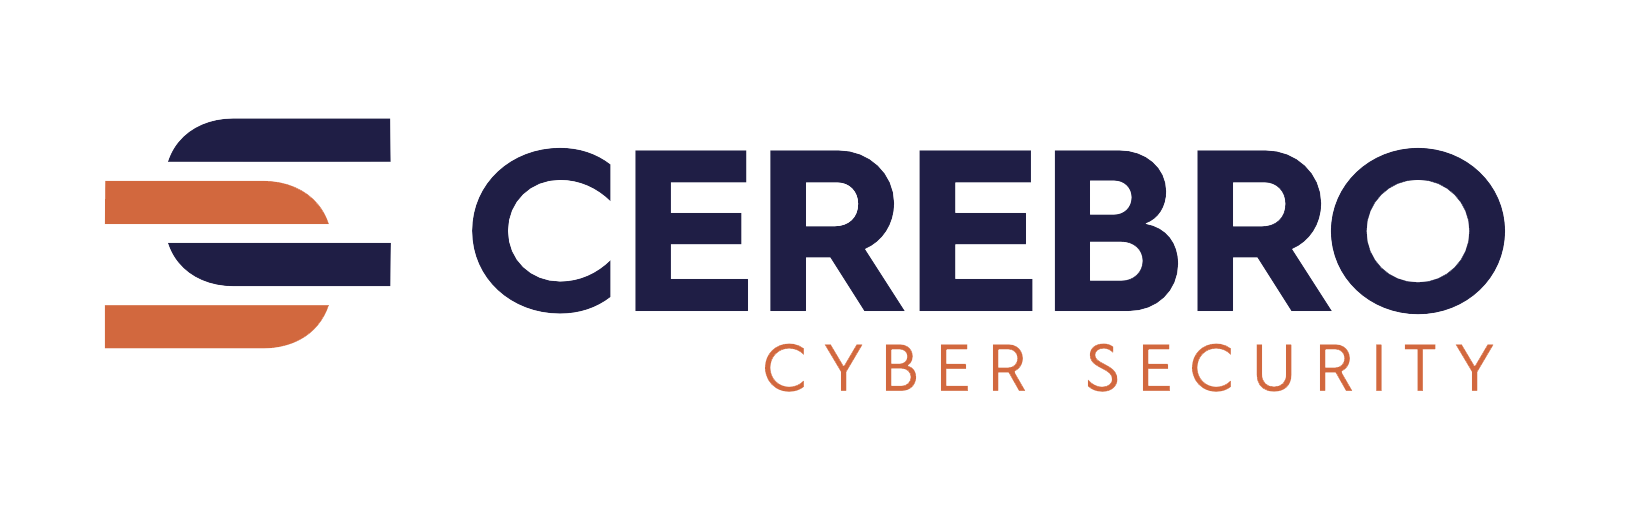 cerebro-cyber-security